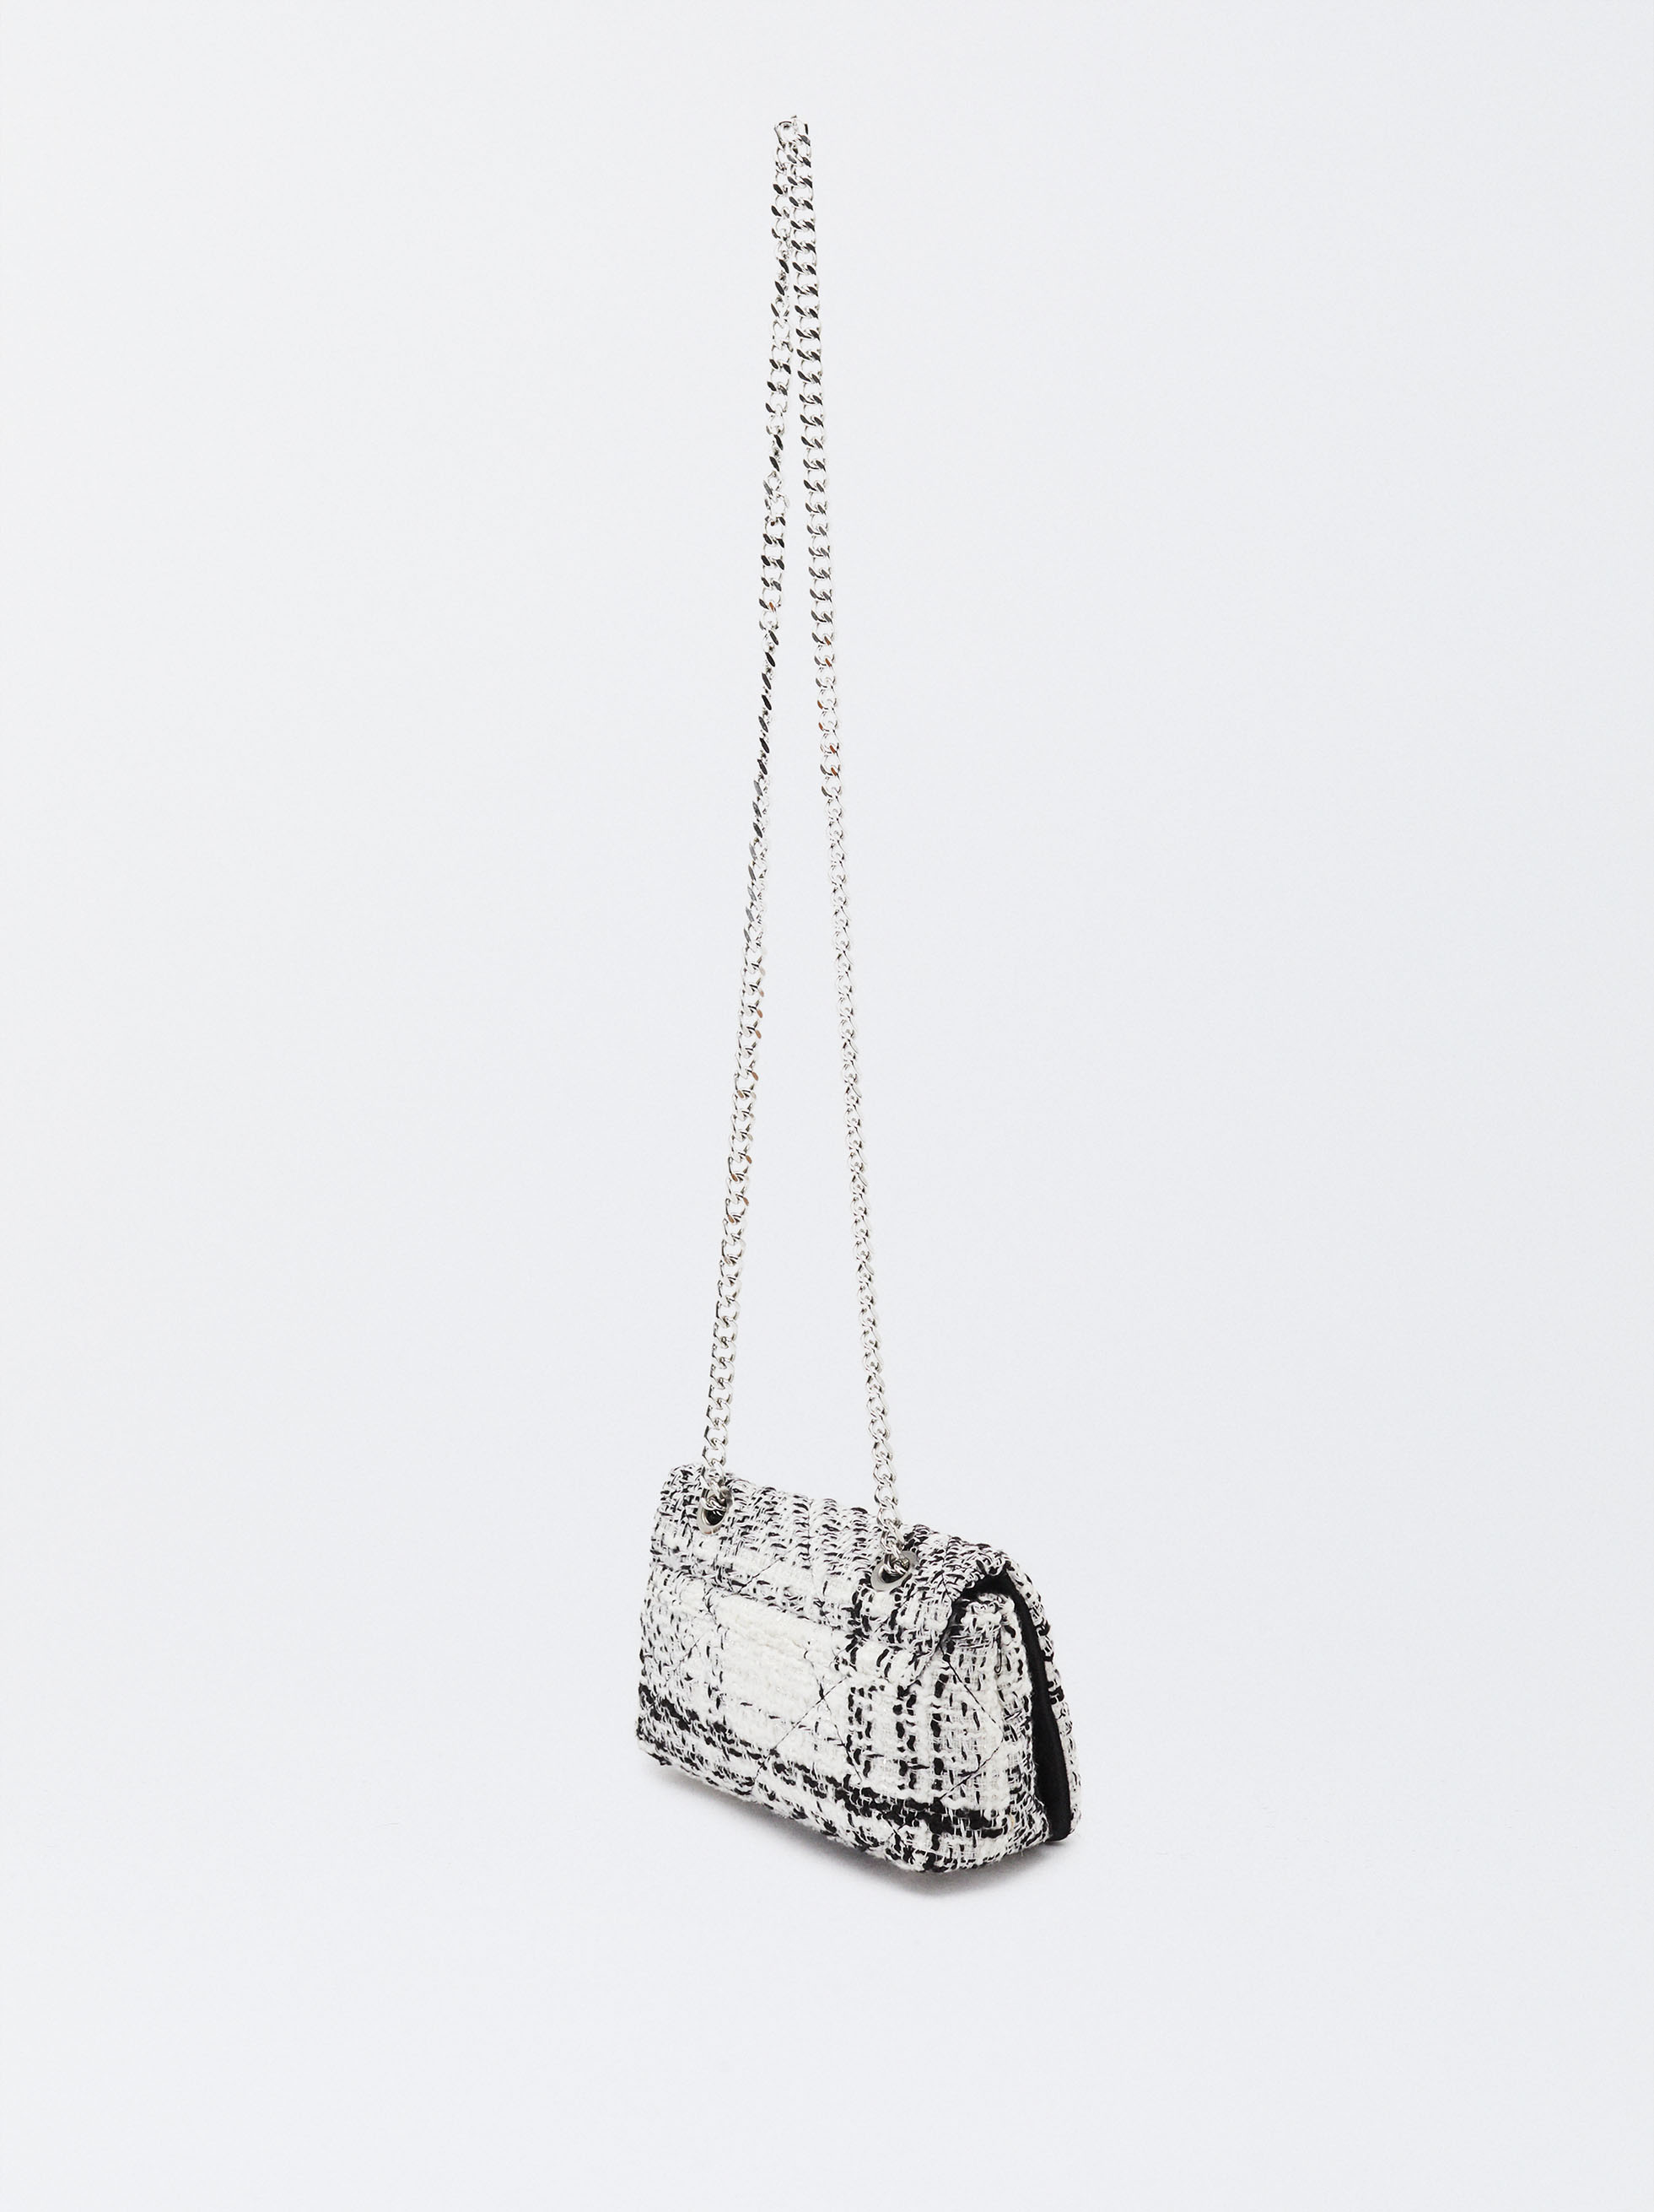 Tweed Bag With Chain Strap Black | Parfois